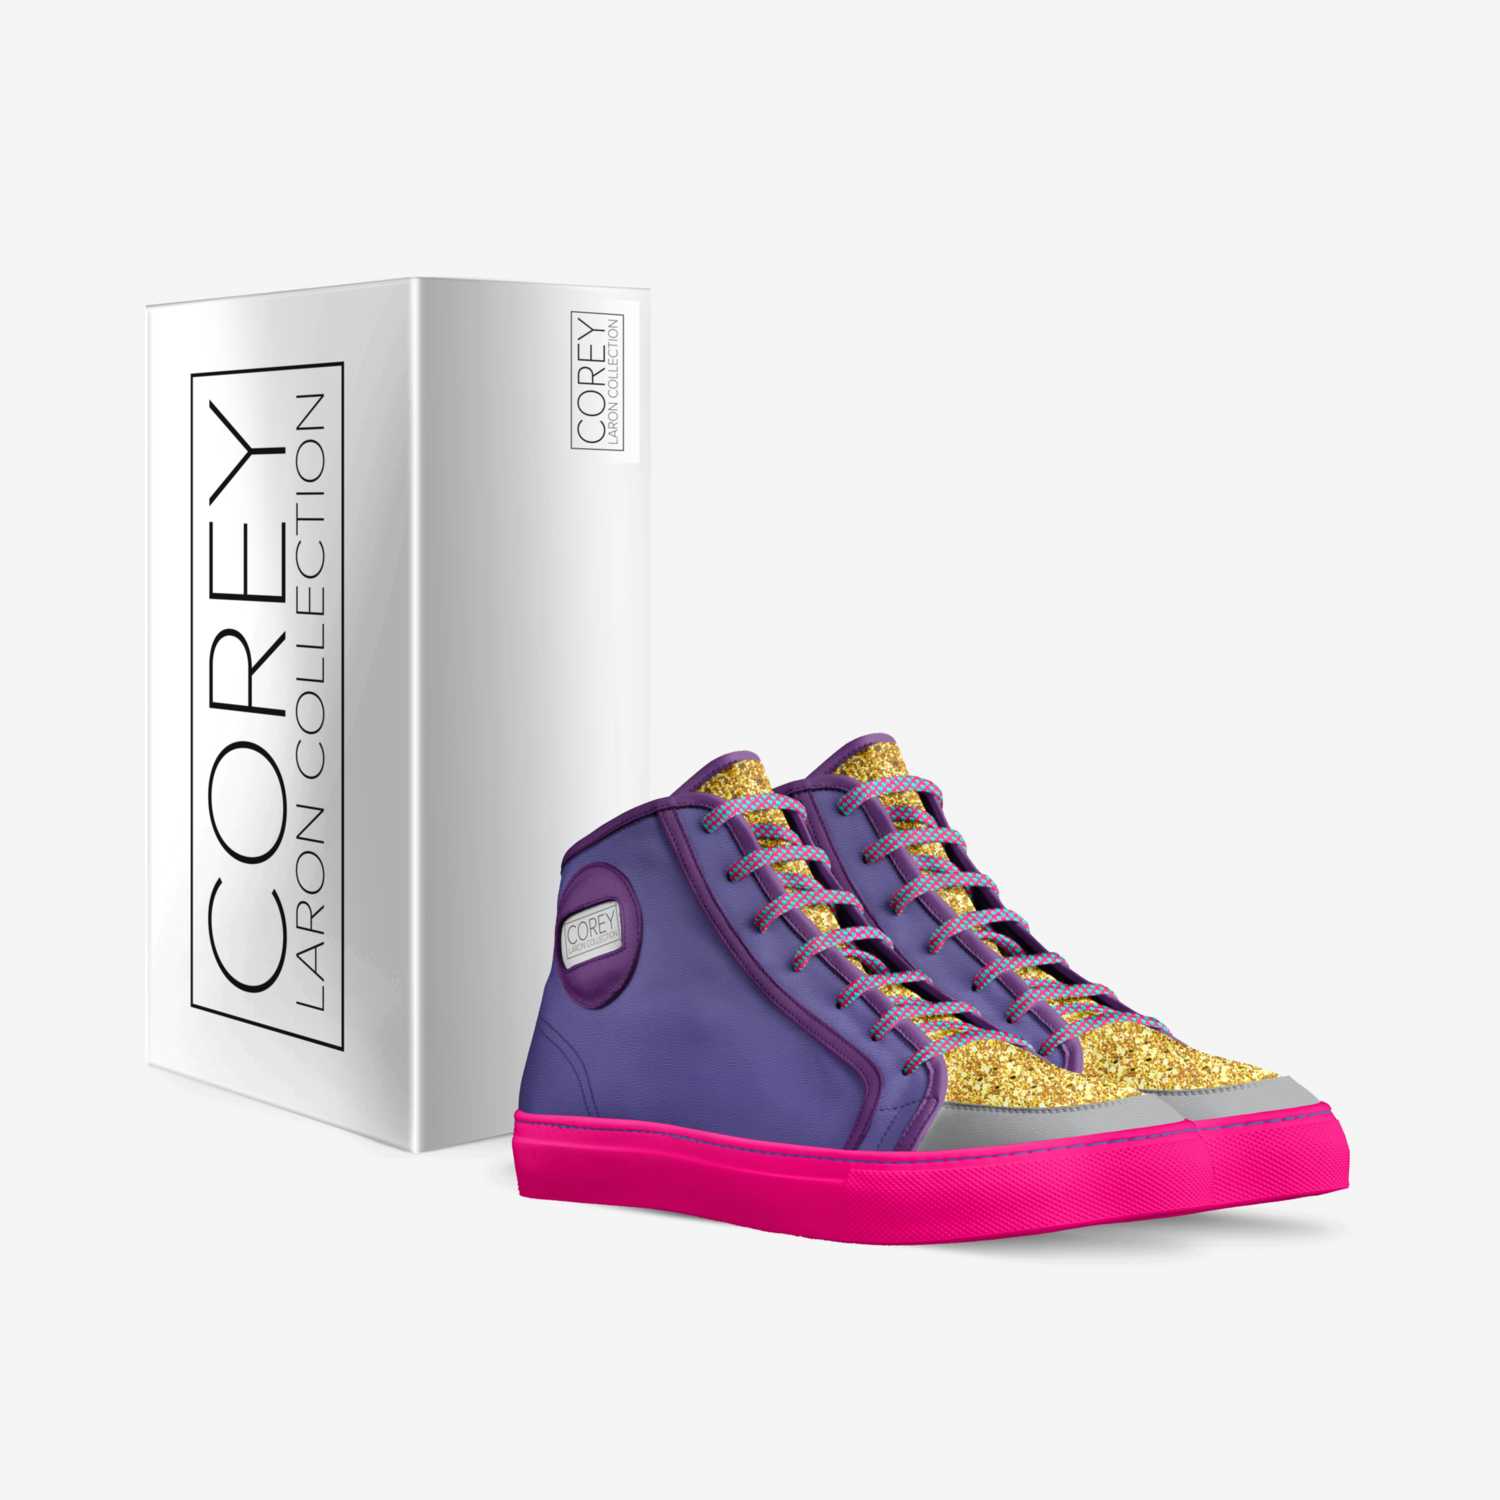 COREY LARON 2 custom made in Italy shoes by Corey Laron Hoskins Jr | Box view